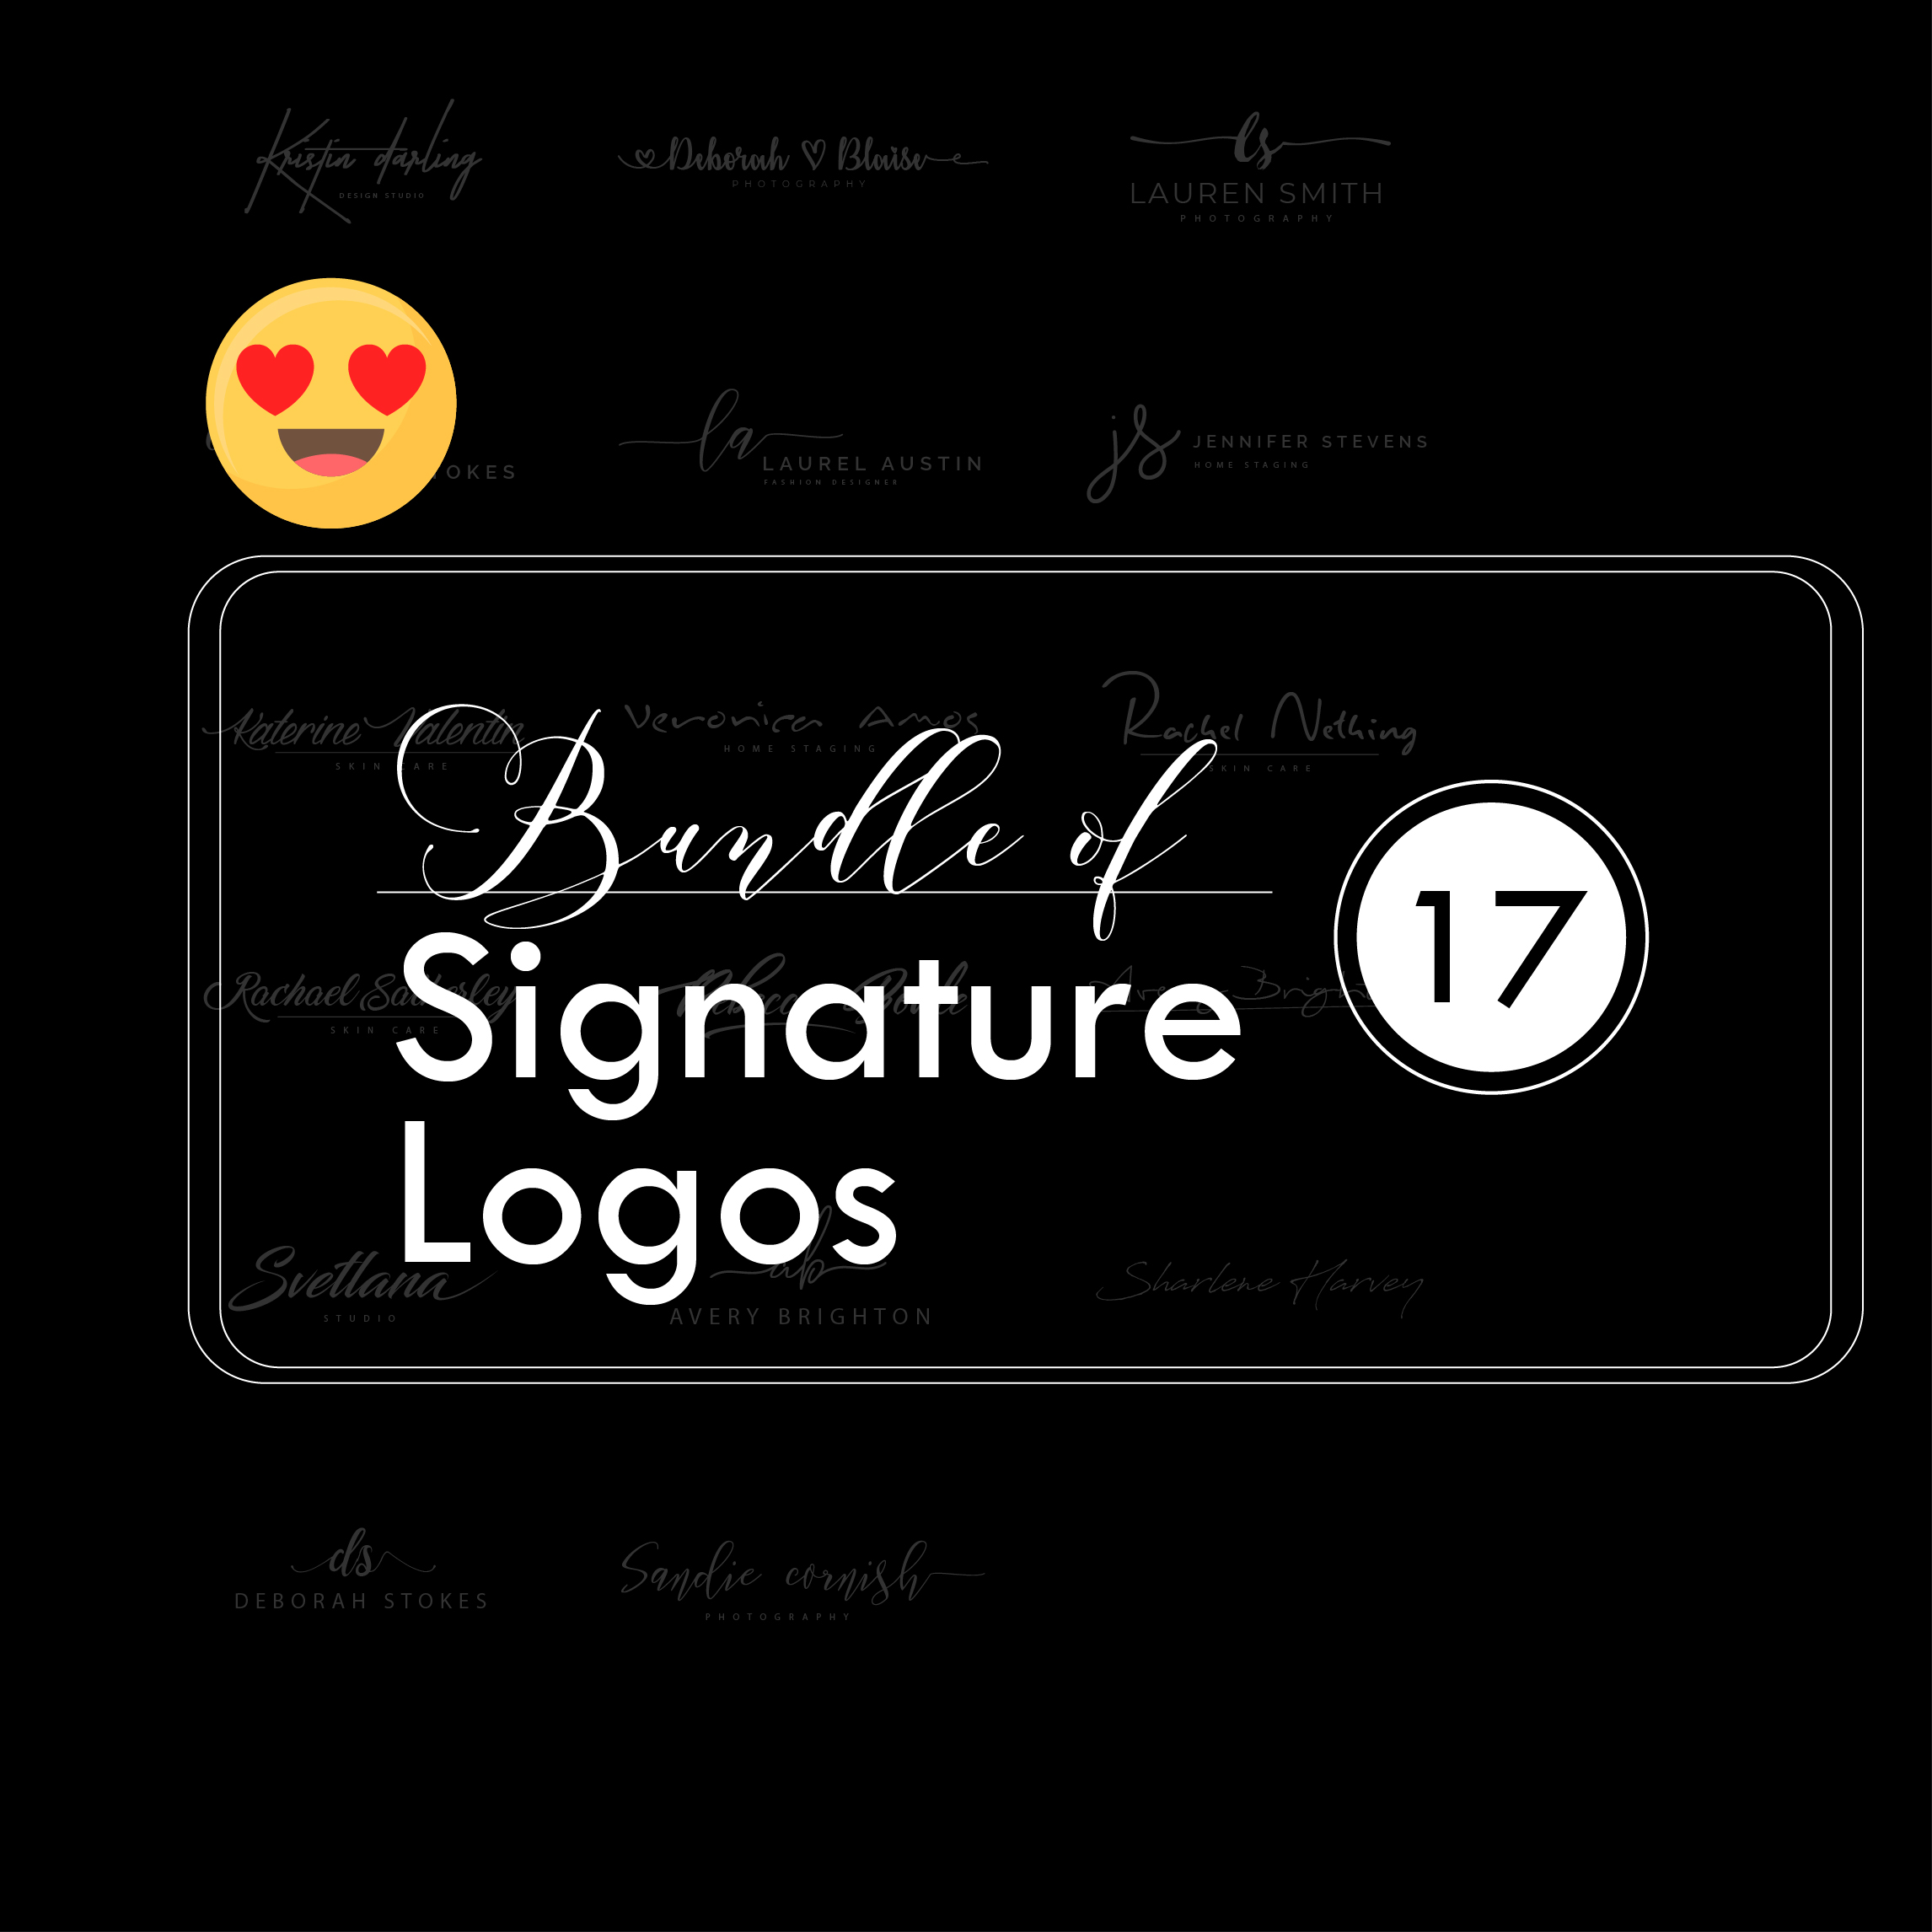 Beautiful Minimal Signature Logos cover image.